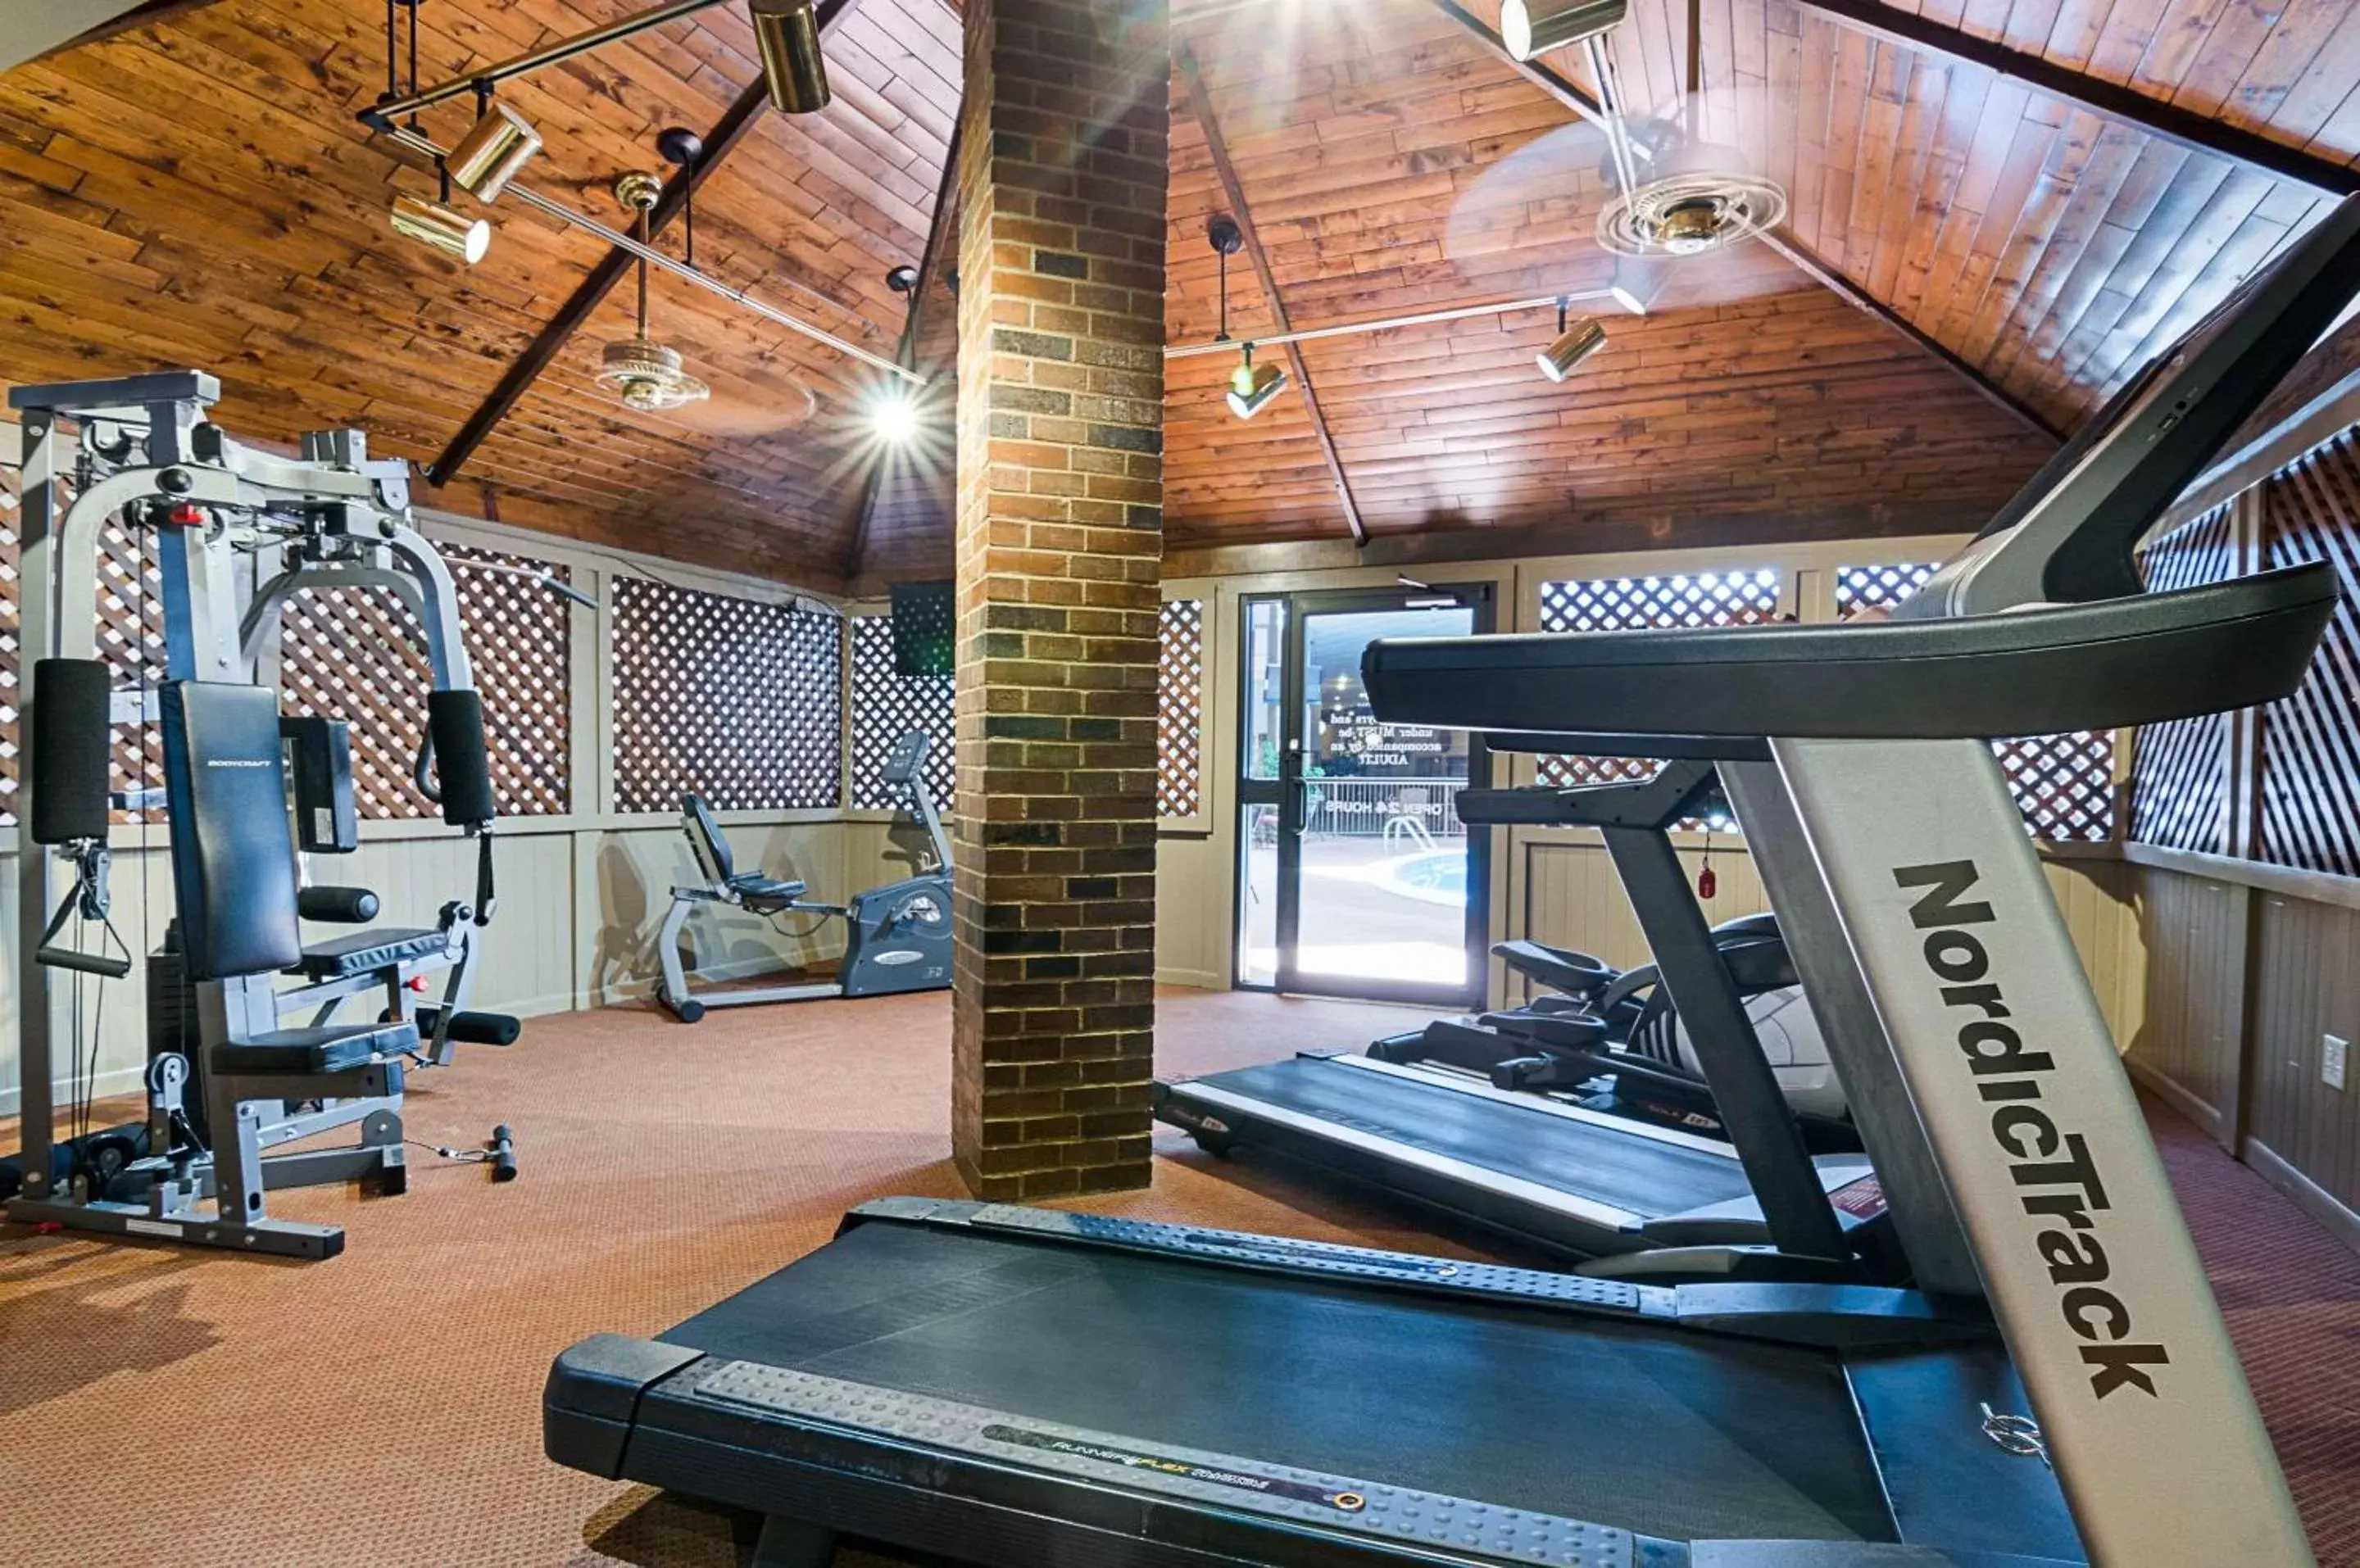 Fitness centre/facilities, Fitness Center/Facilities in Clarion Inn Garden City